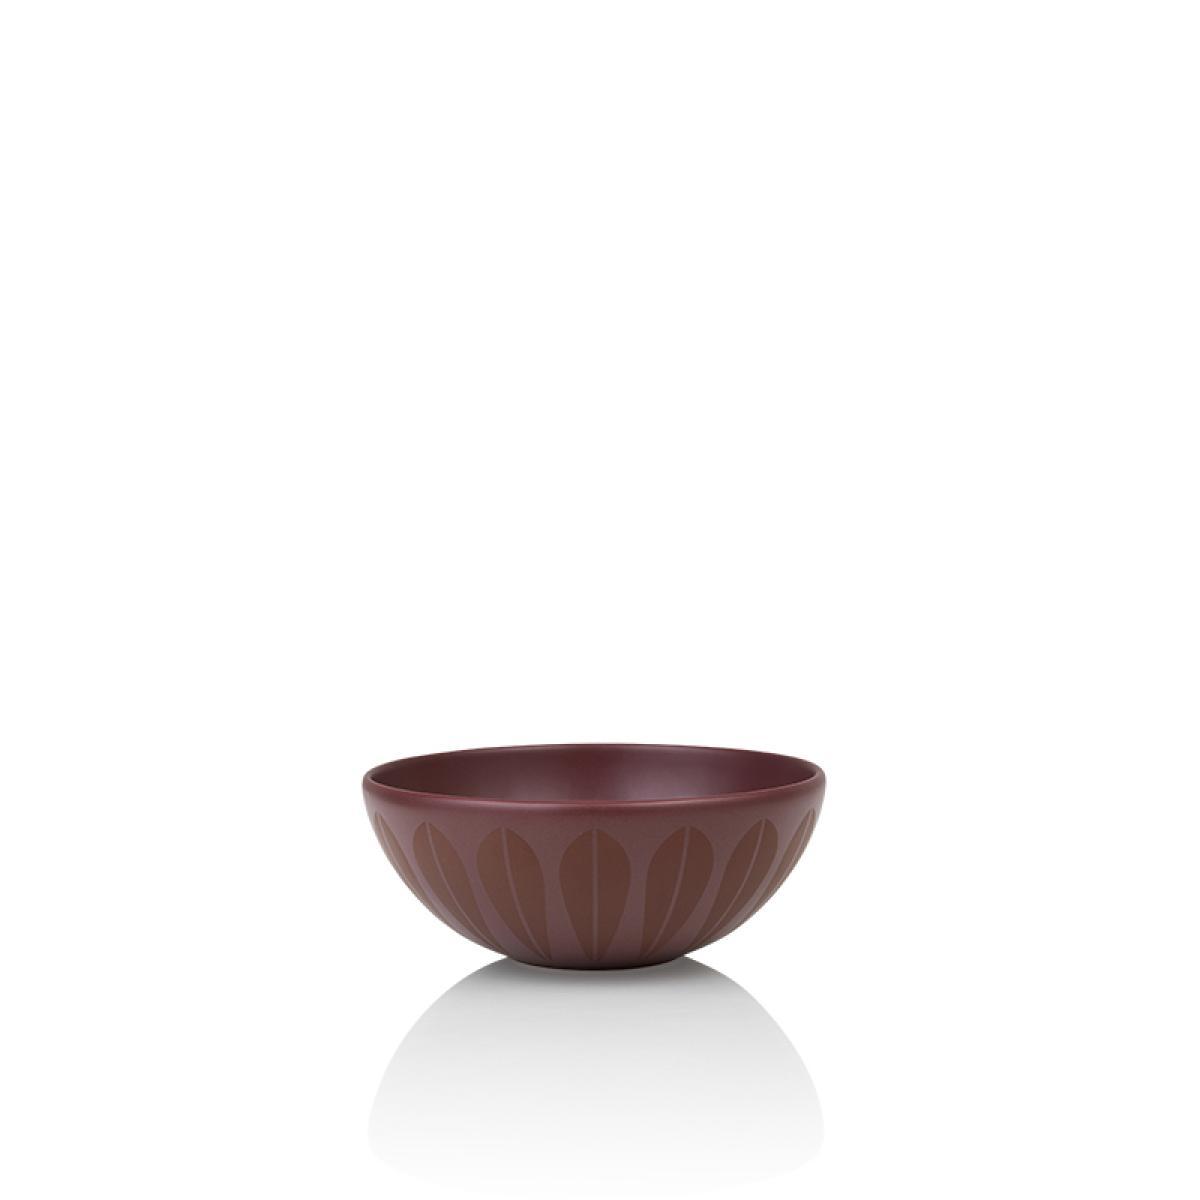 Lucie Kaas Arne Clausen Bowl scuro rosso, 15 cm